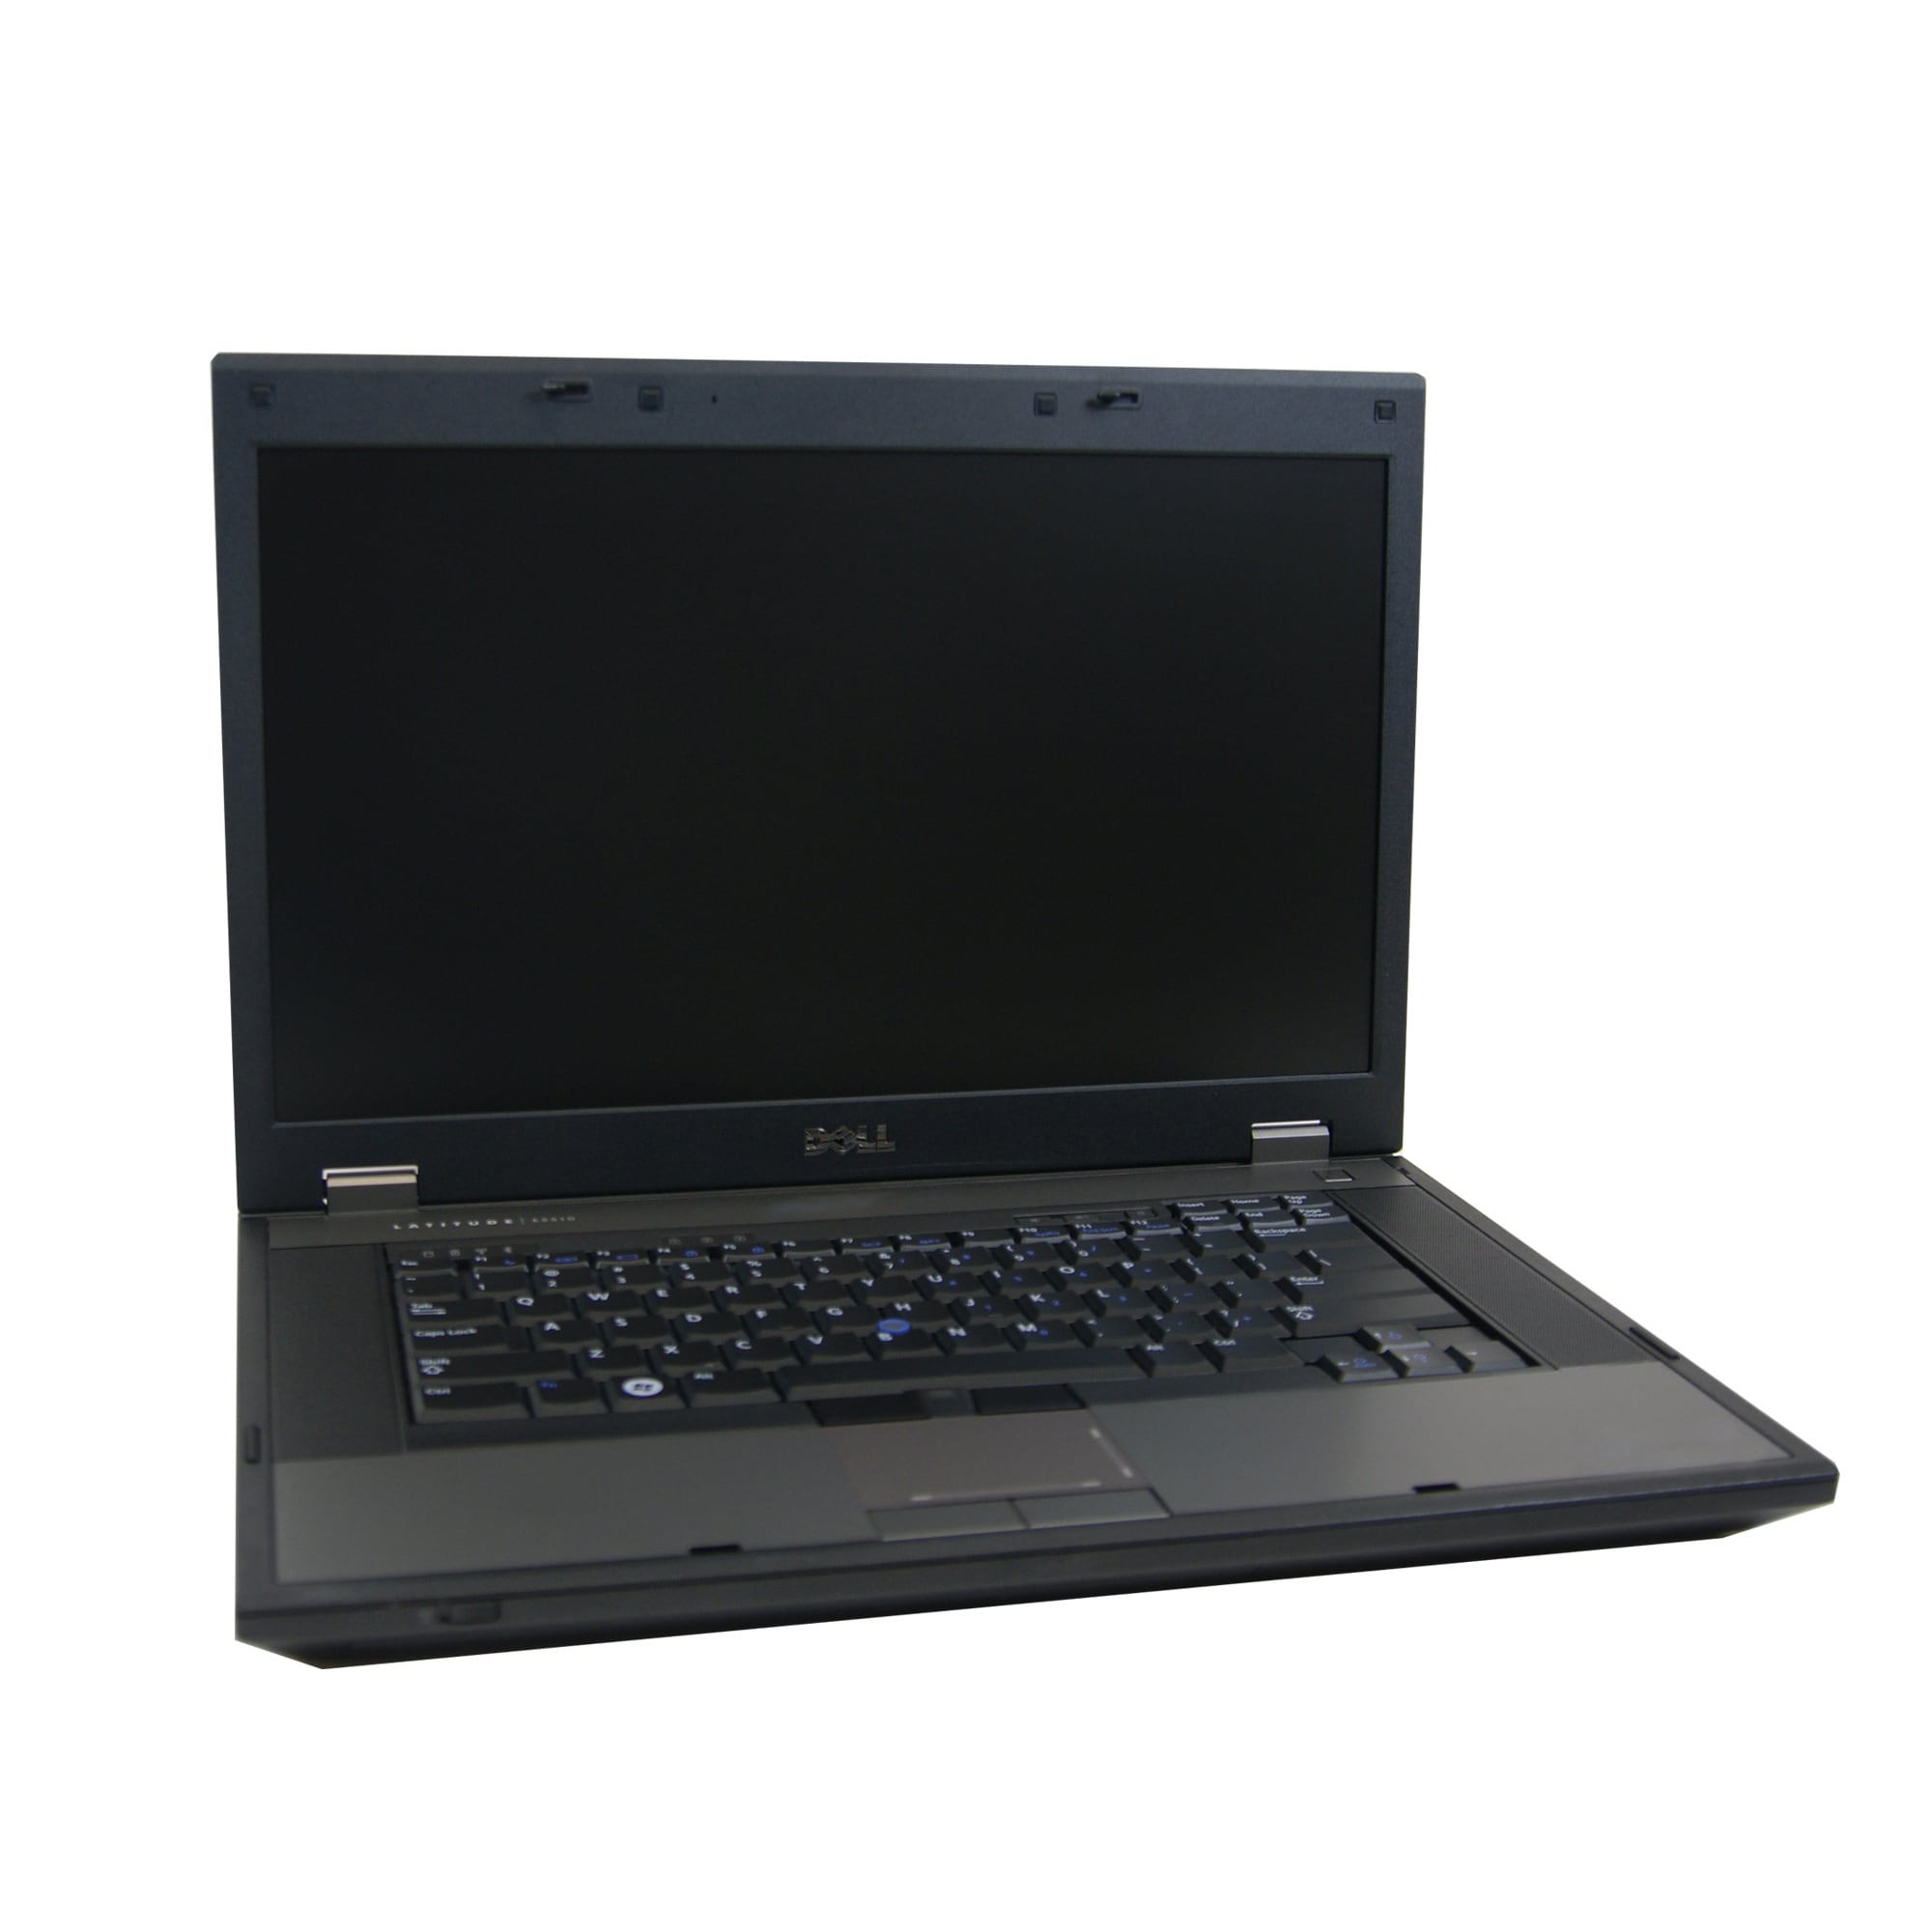 Shop Dell Latitude E5510 Intel Core I5 460m 2 53ghz Cpu 2gb Ram 3gb Hdd Windows 10 Pro 15 6 Inch Laptop Refurbished Overstock